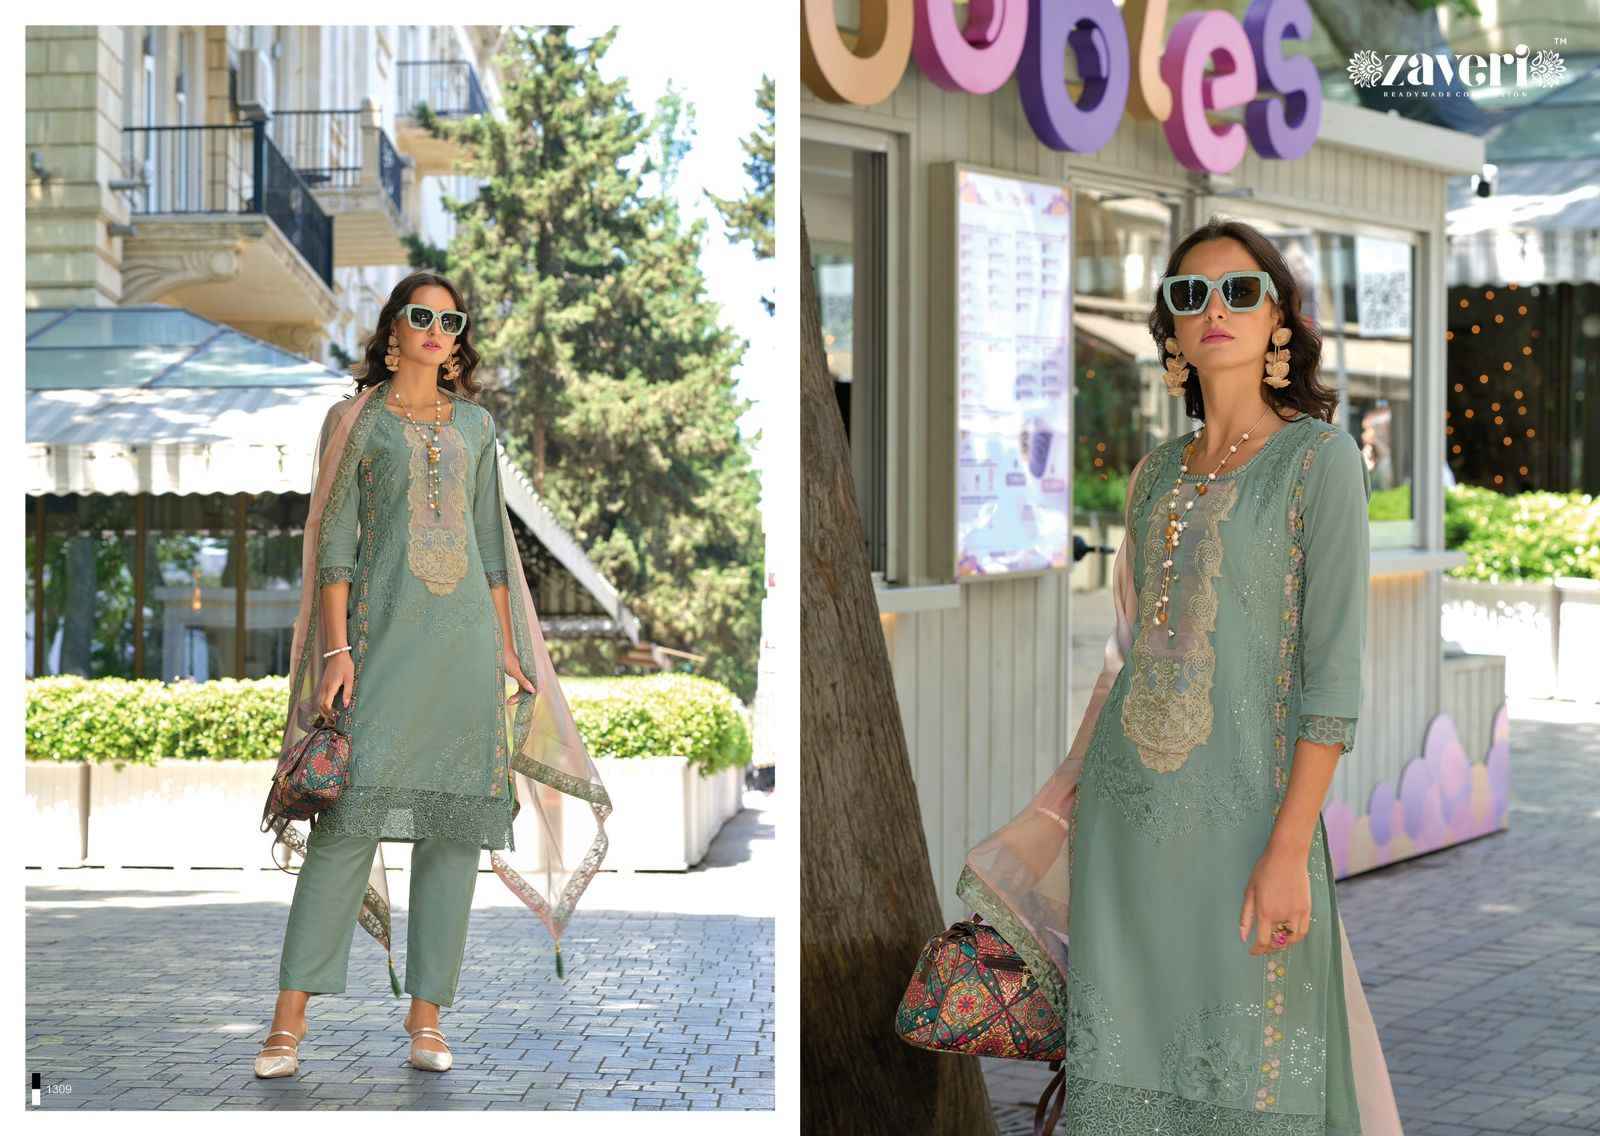 Zaveri Premium Vol 1 Readymade Cotton Dress 2 pcs Catalogue